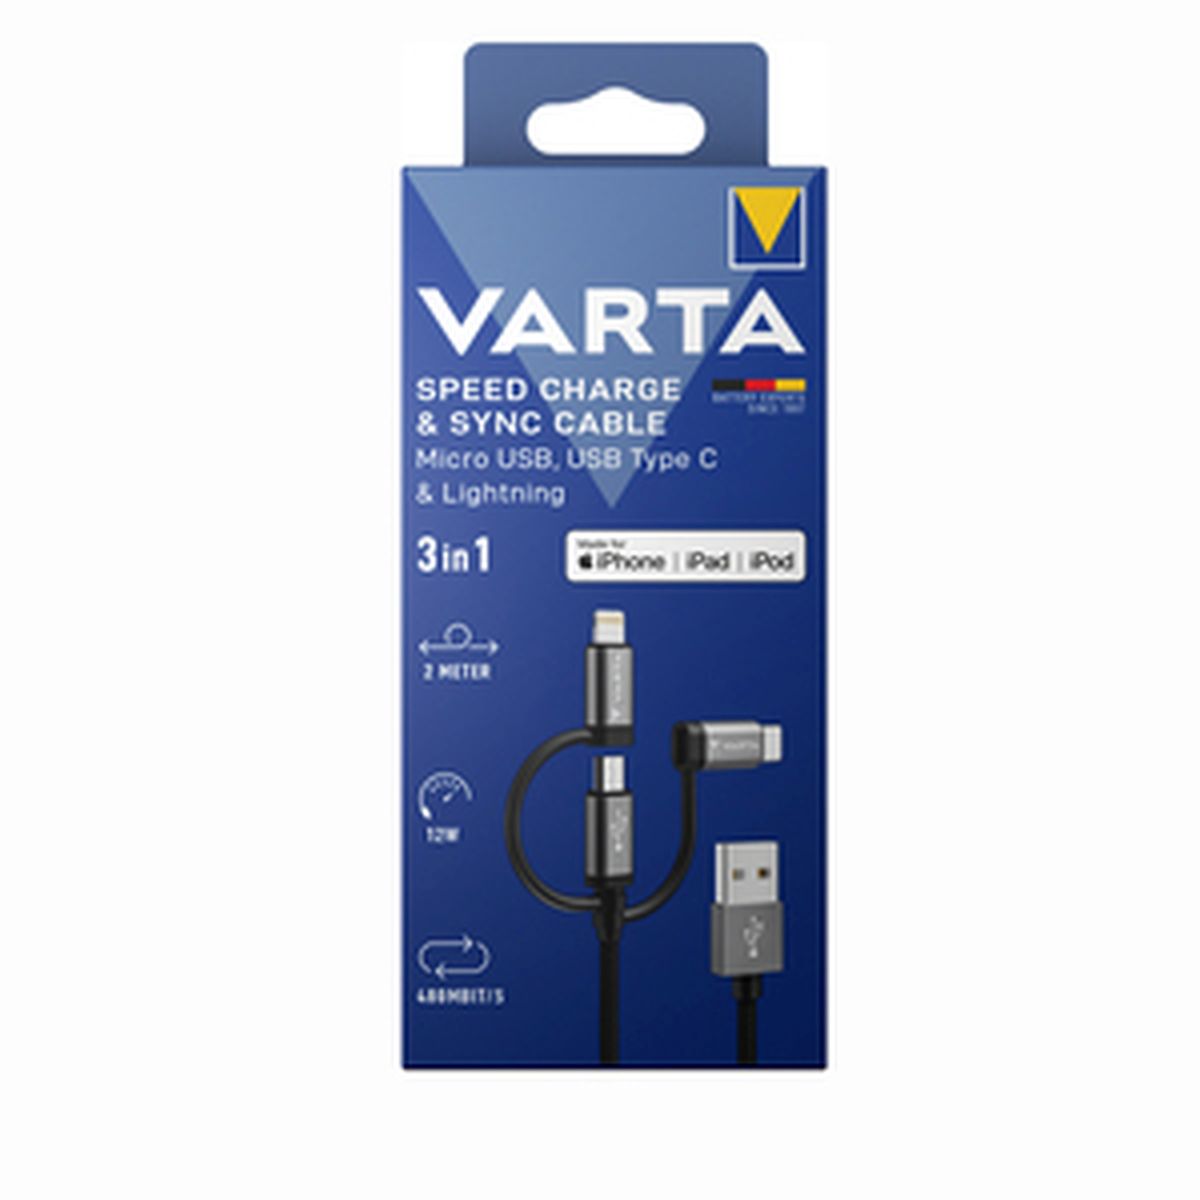 Varta Micro USB, USB Type C & Lightning Speed Charge & Sync Cable